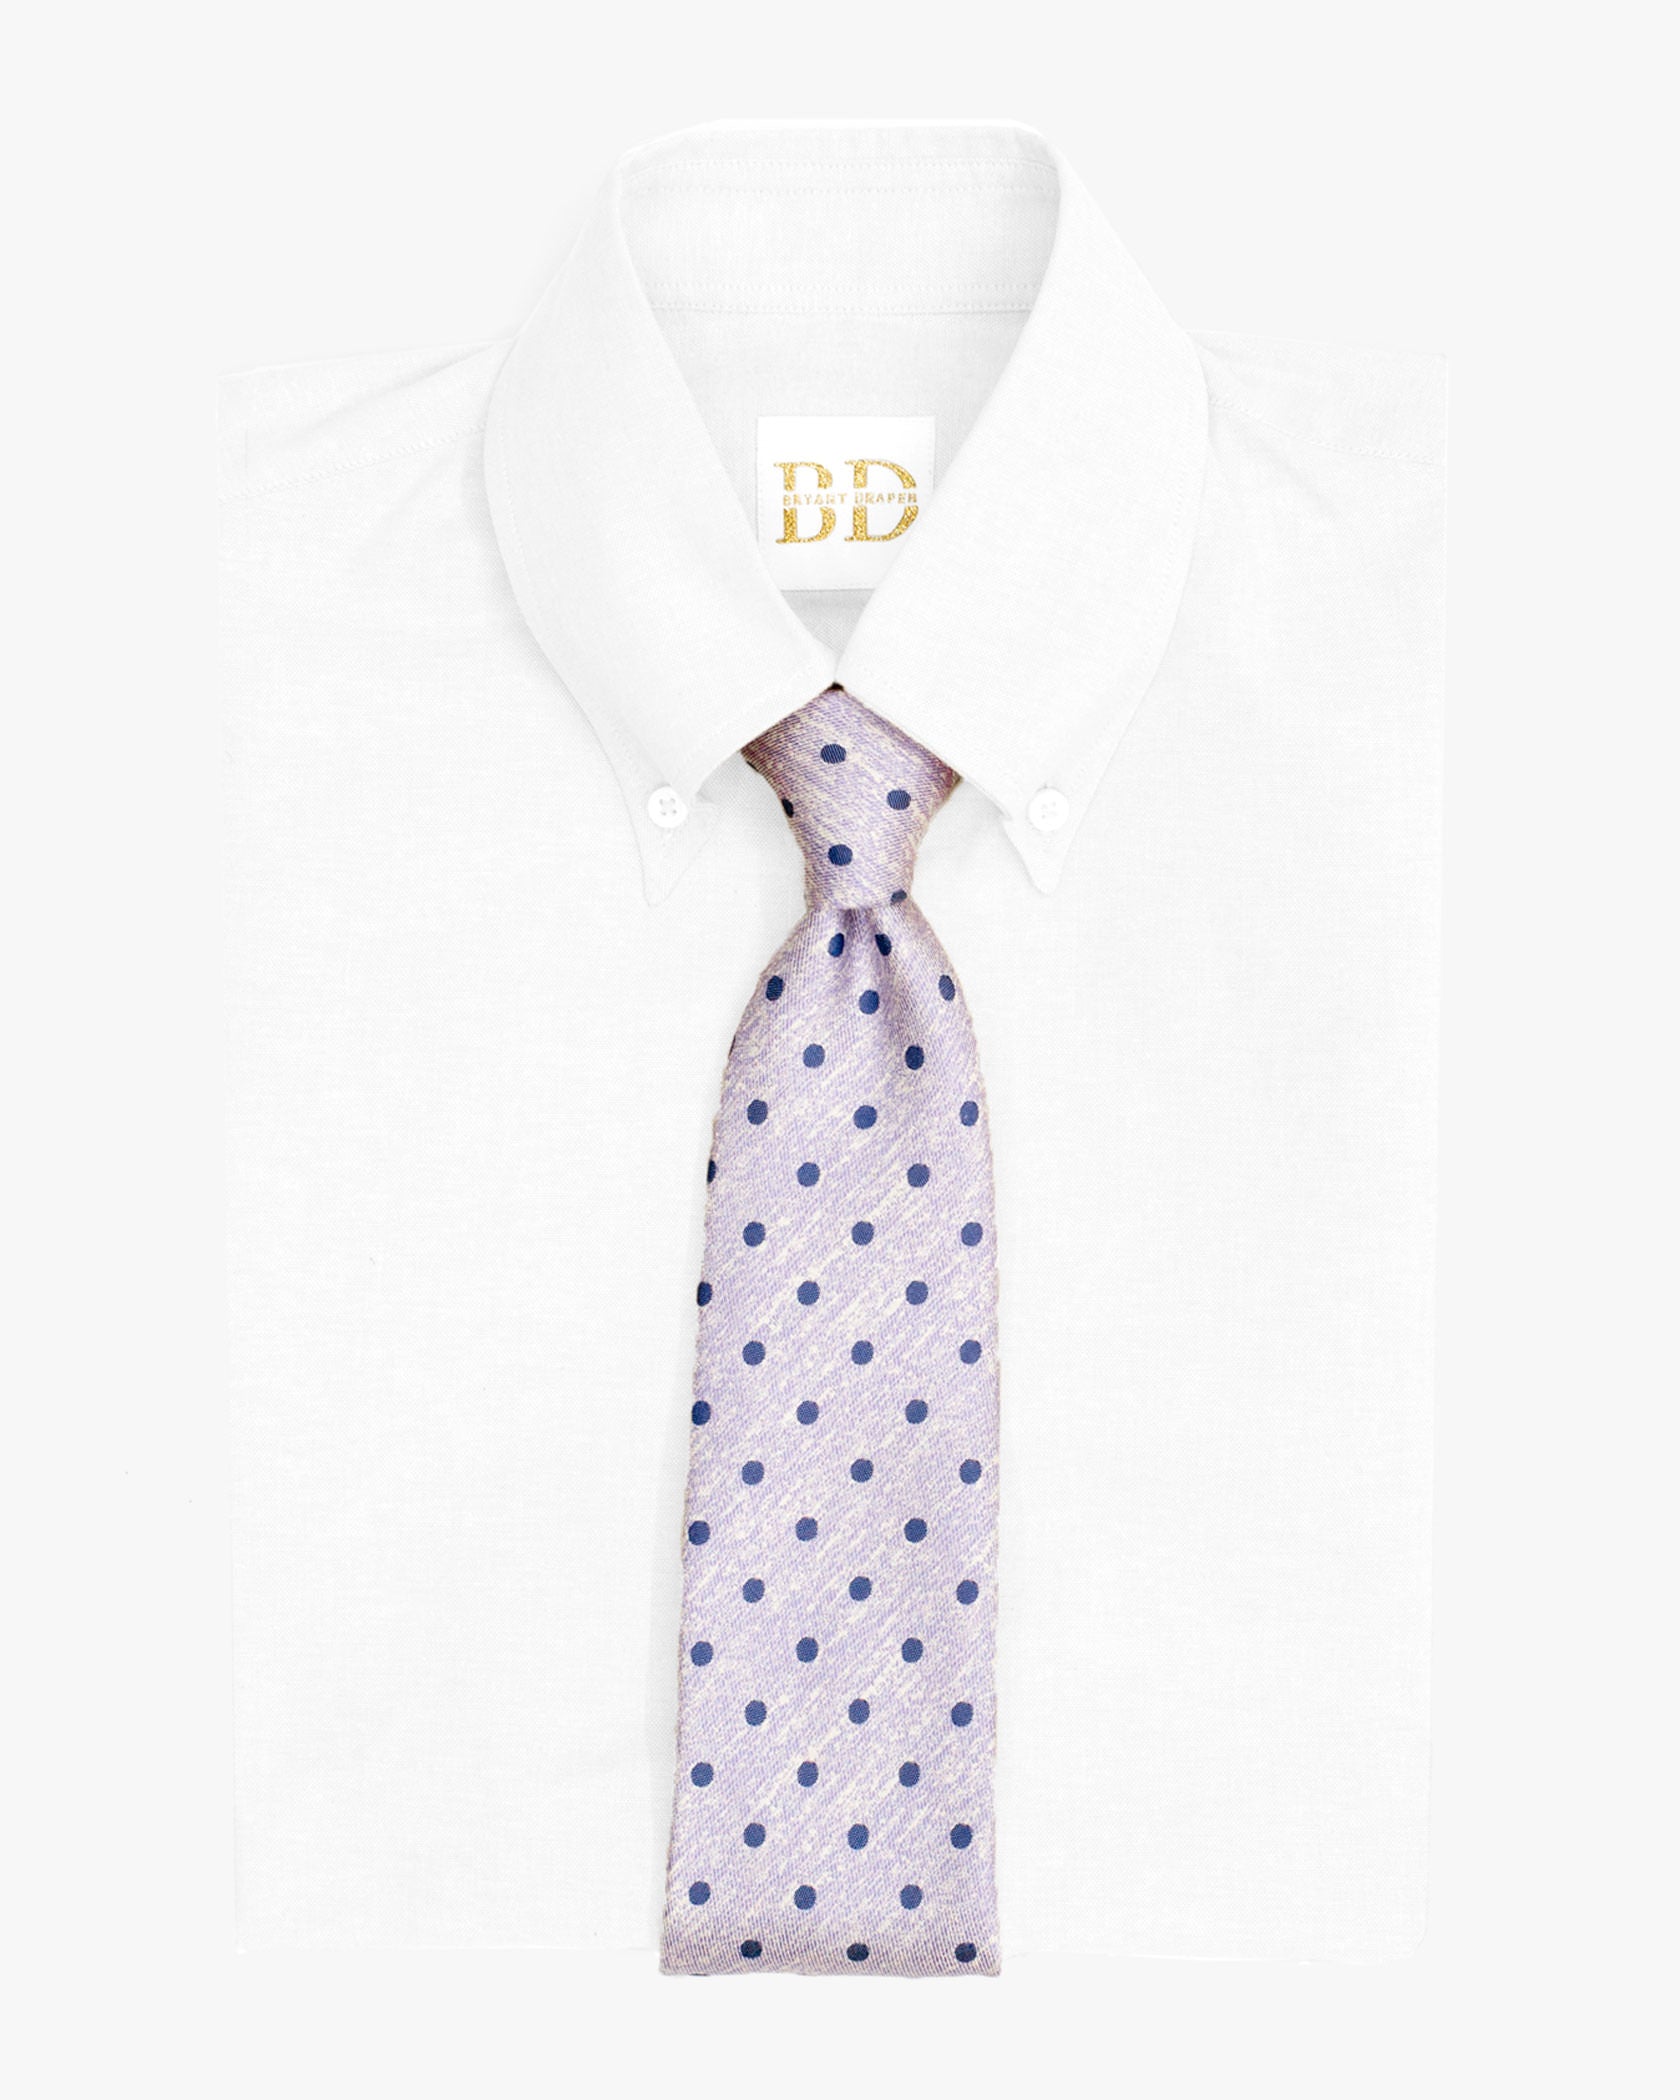 Lavender Necktie with Navy Polka Dots